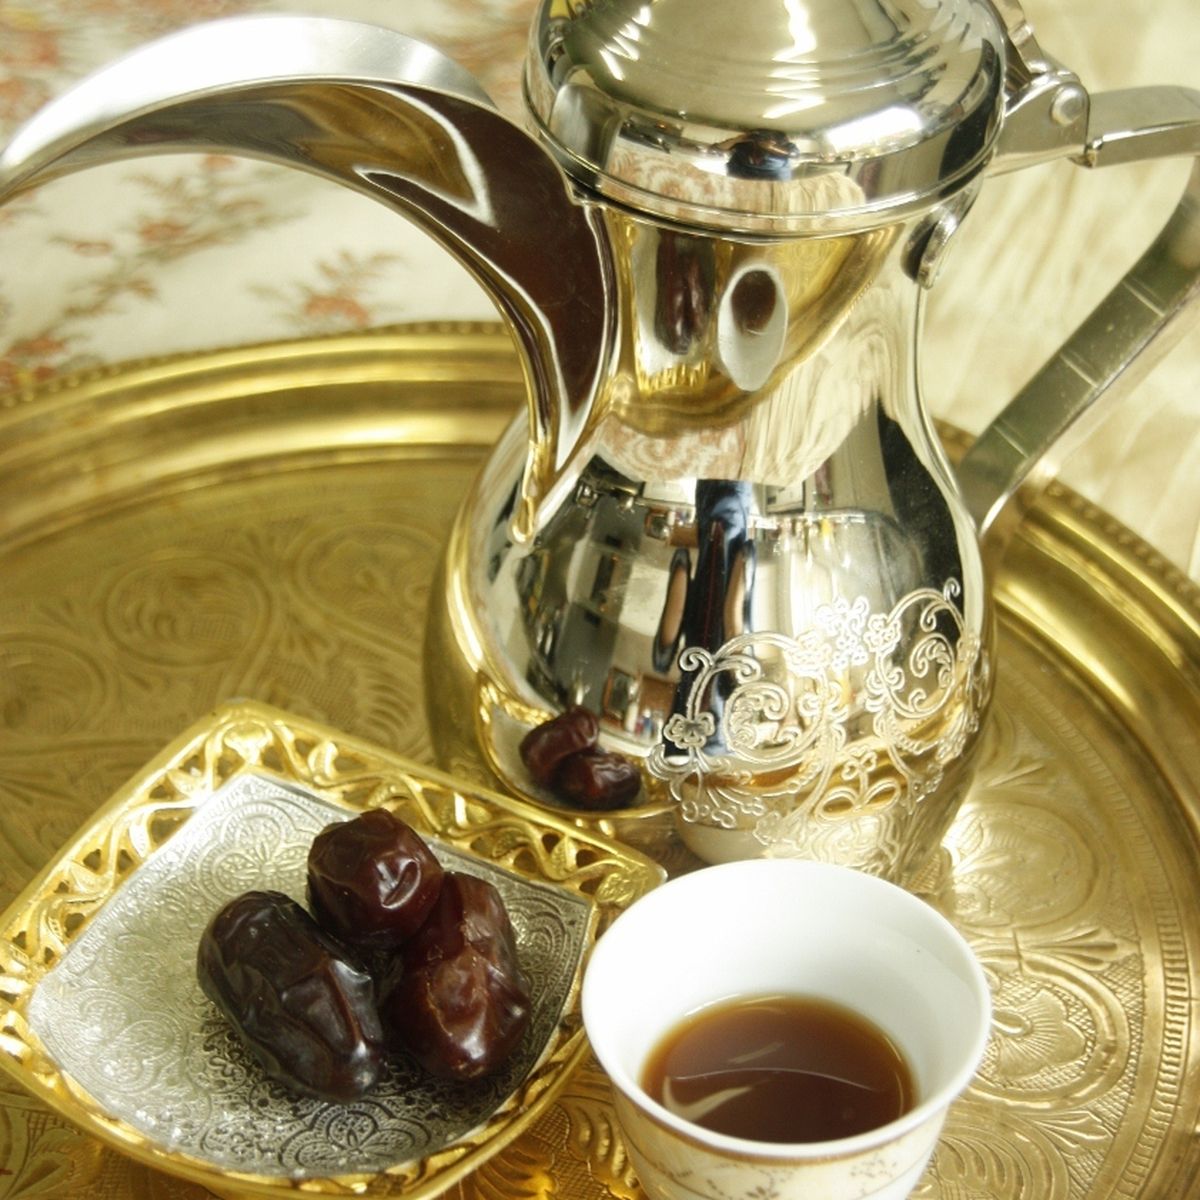 Best Arabic Coffee Recipe - How to Make Qahwah